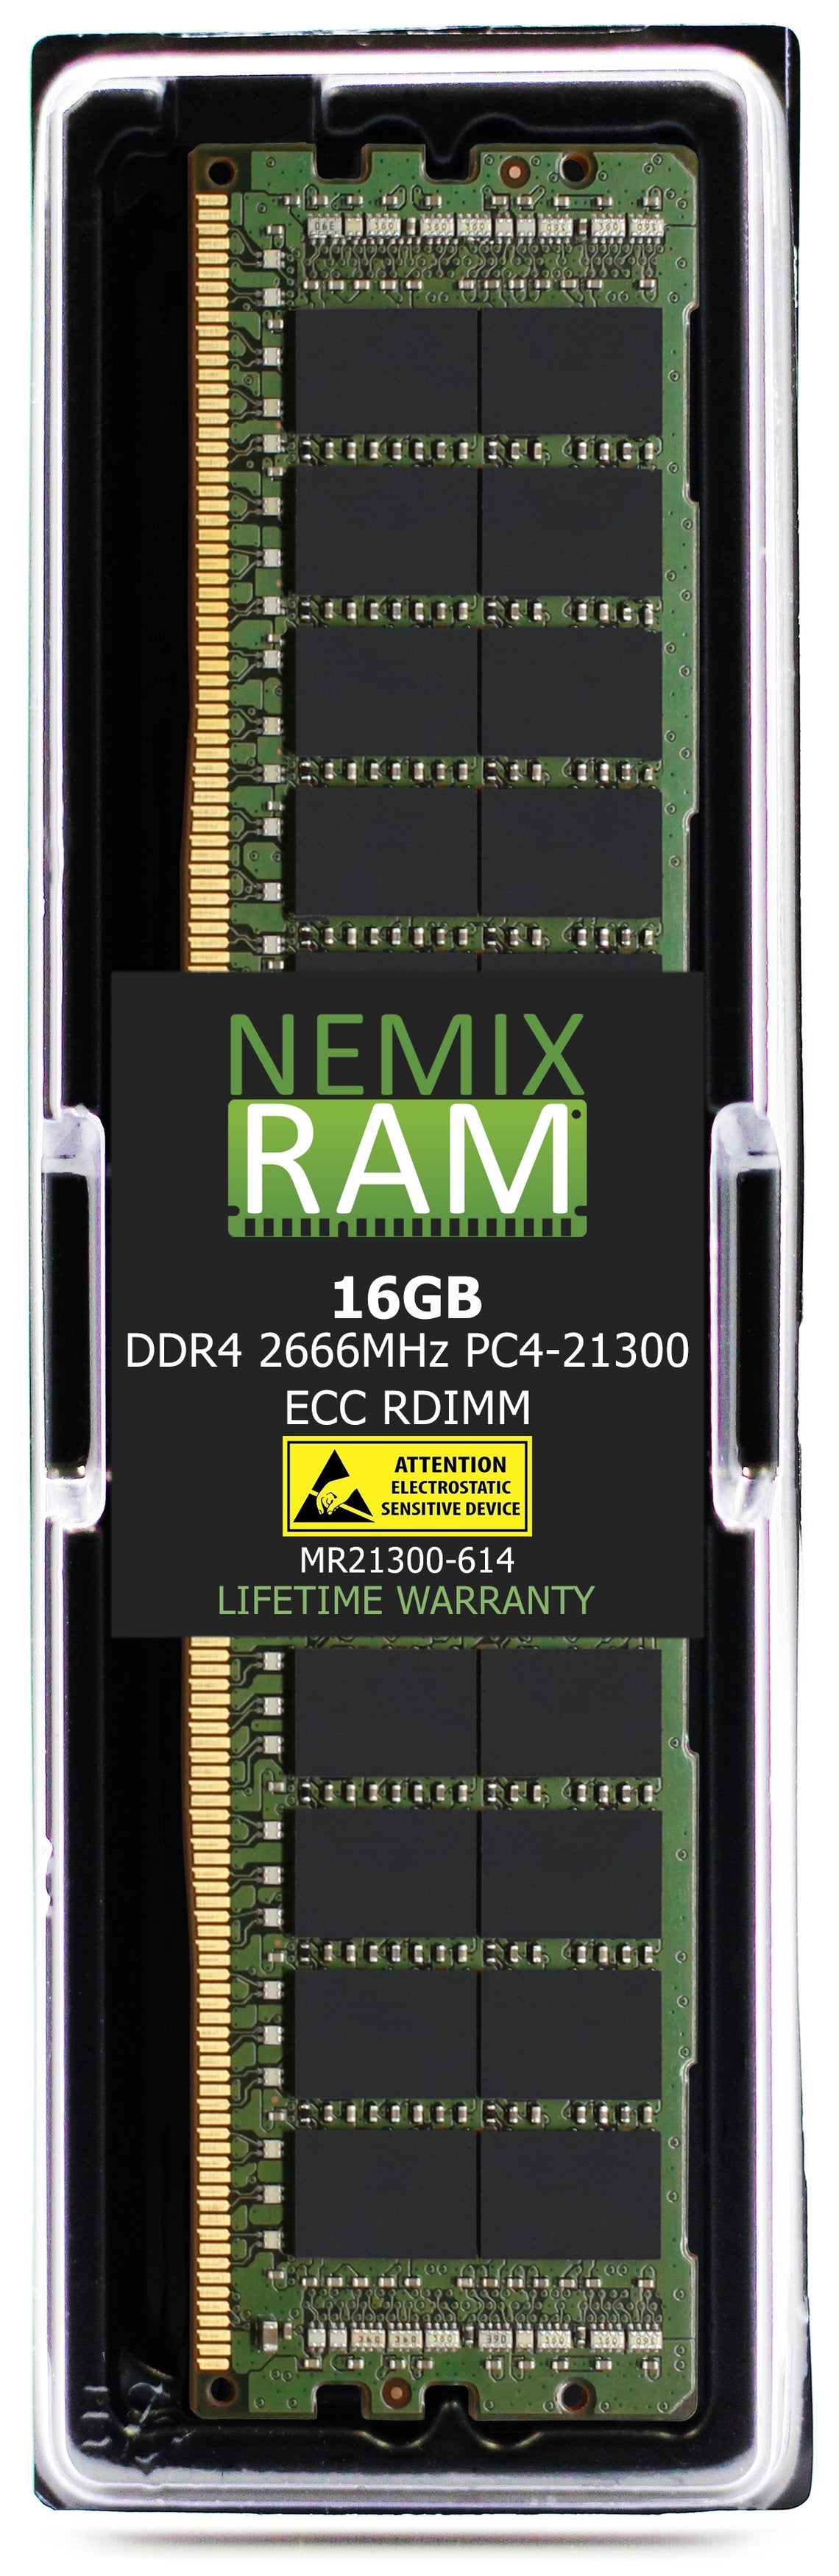 NEC Express5800 R120h Memory Module N8102-709 16GB DDR4 2666MHZ PC4-21300 RDIMM